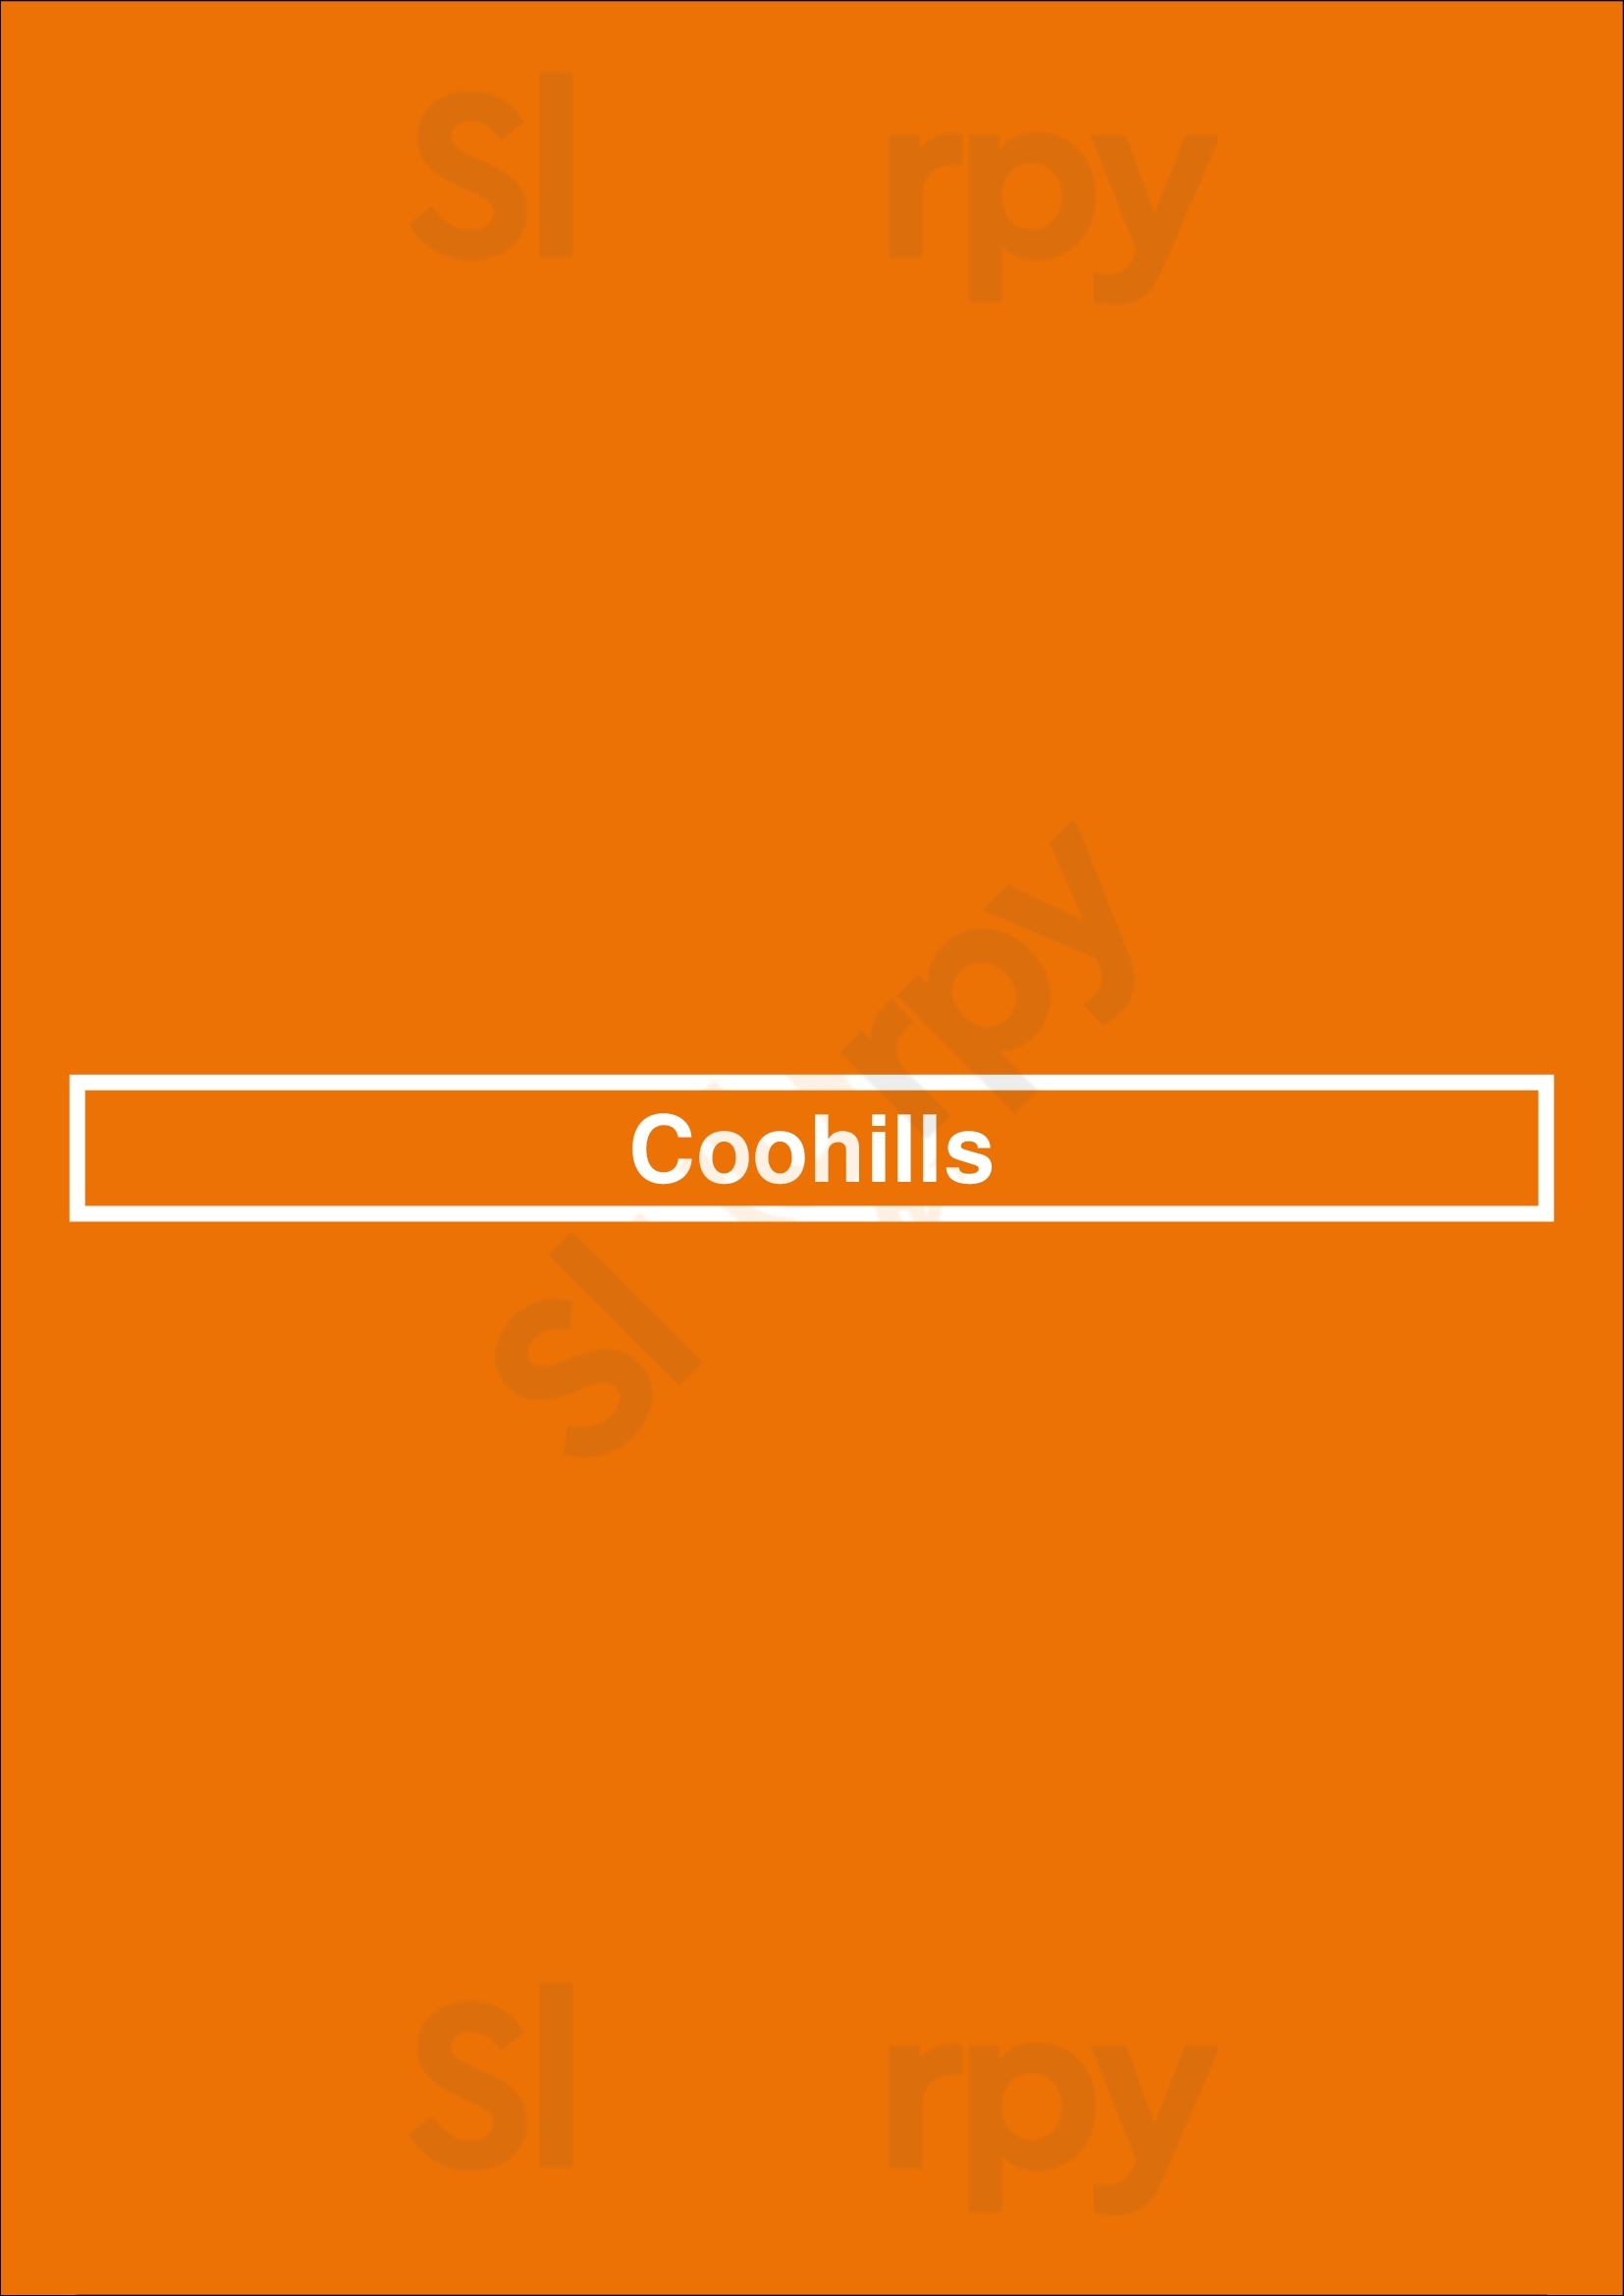 Coohills Denver Menu - 1